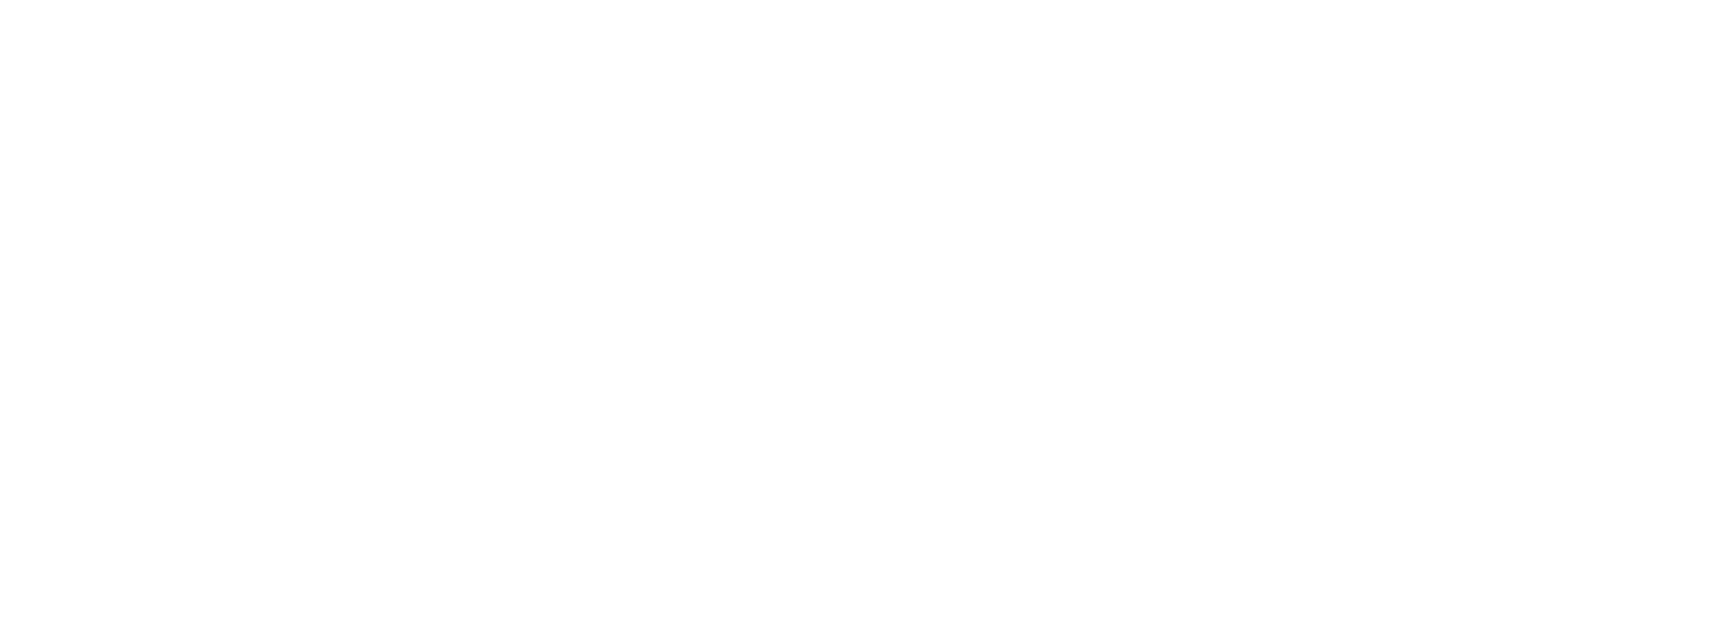 Rafferty logo